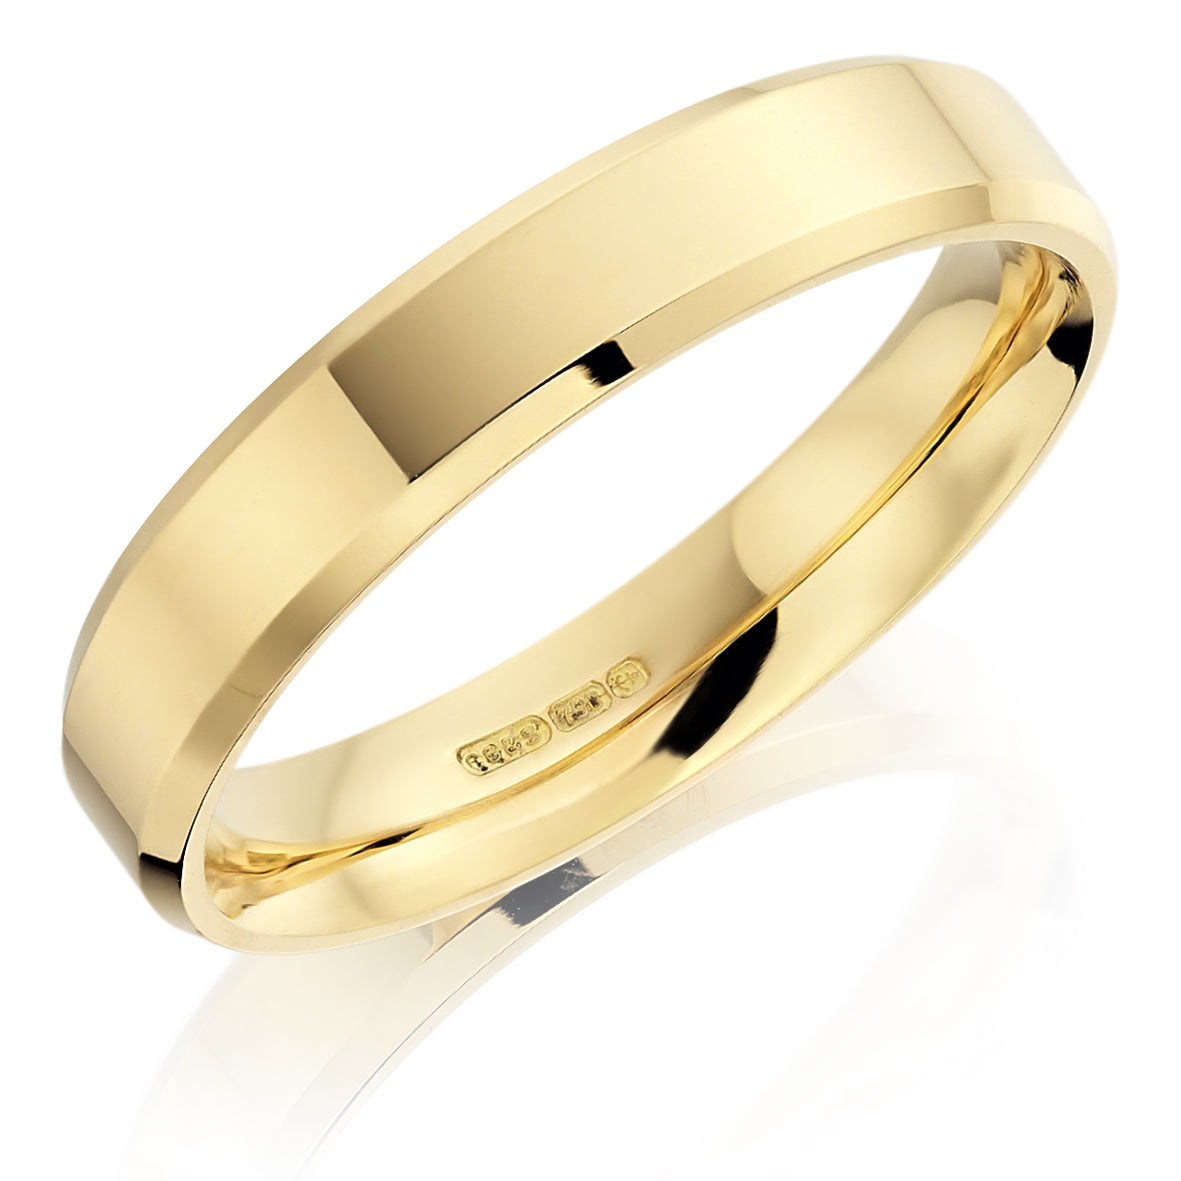 Ladies 9ct Yellow Gold 4mm Classic Flat Court Wedding Ring